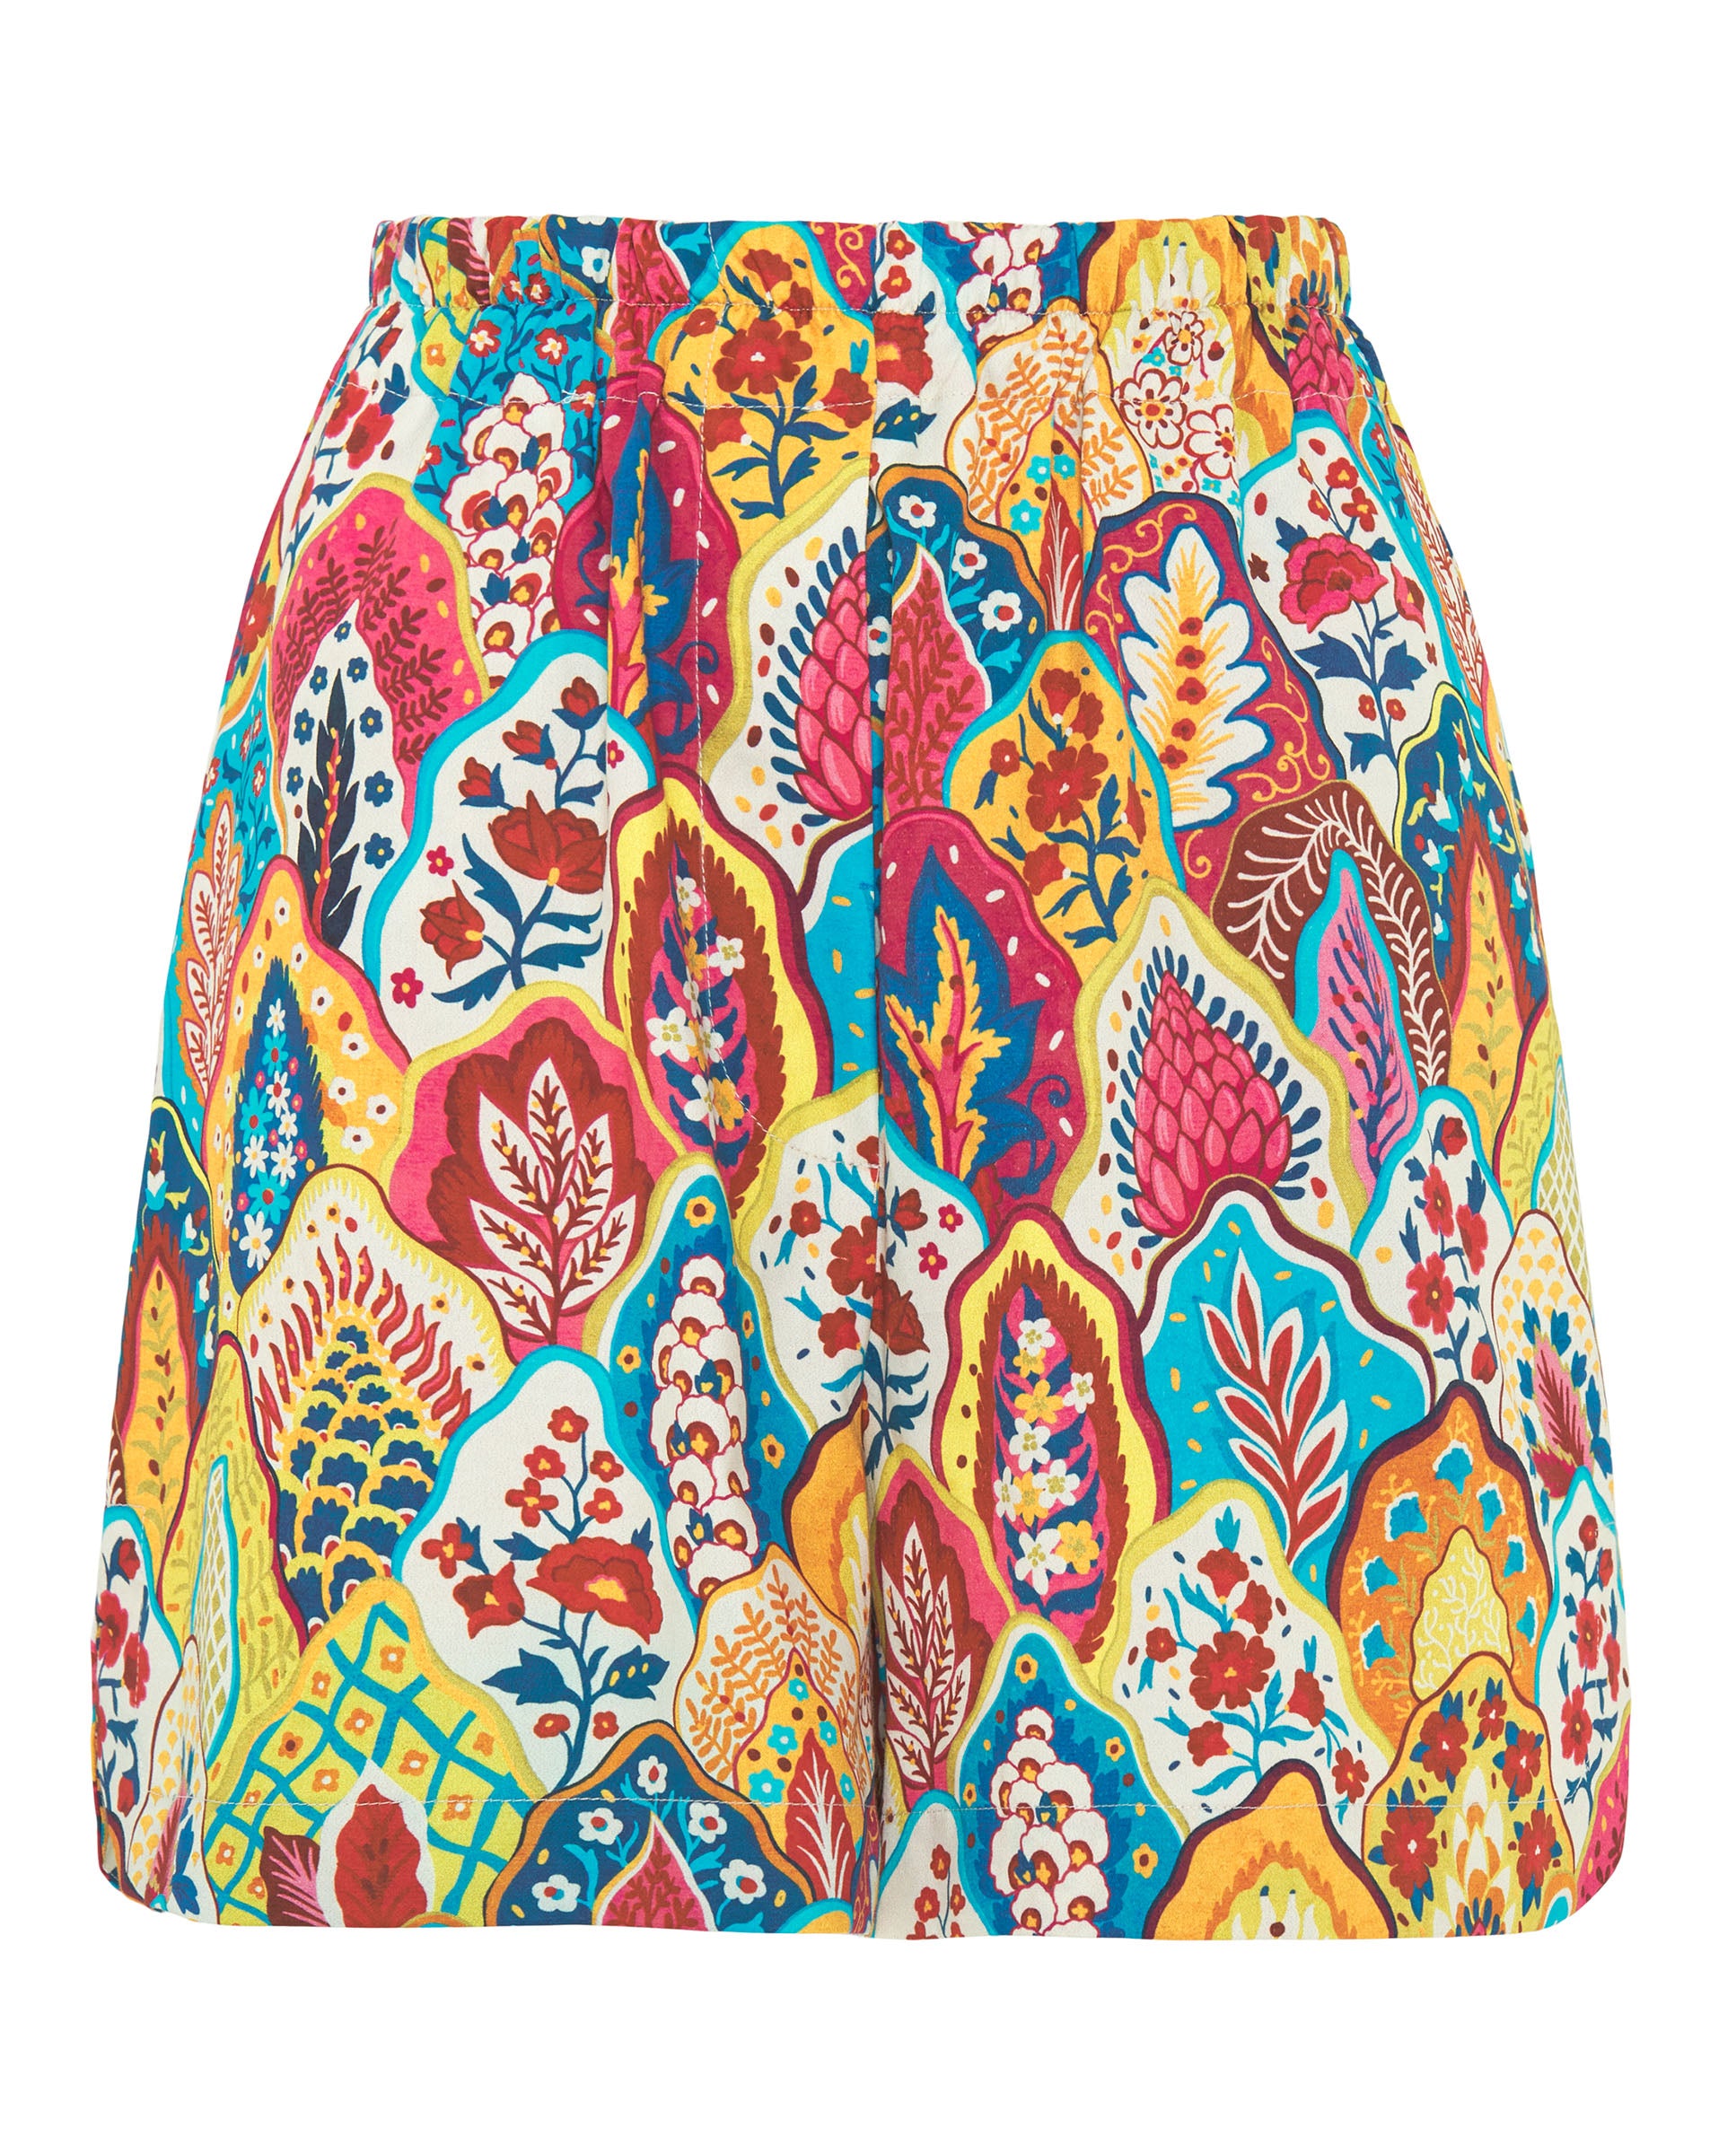 Multicolor cotton print shorts by MIRTO